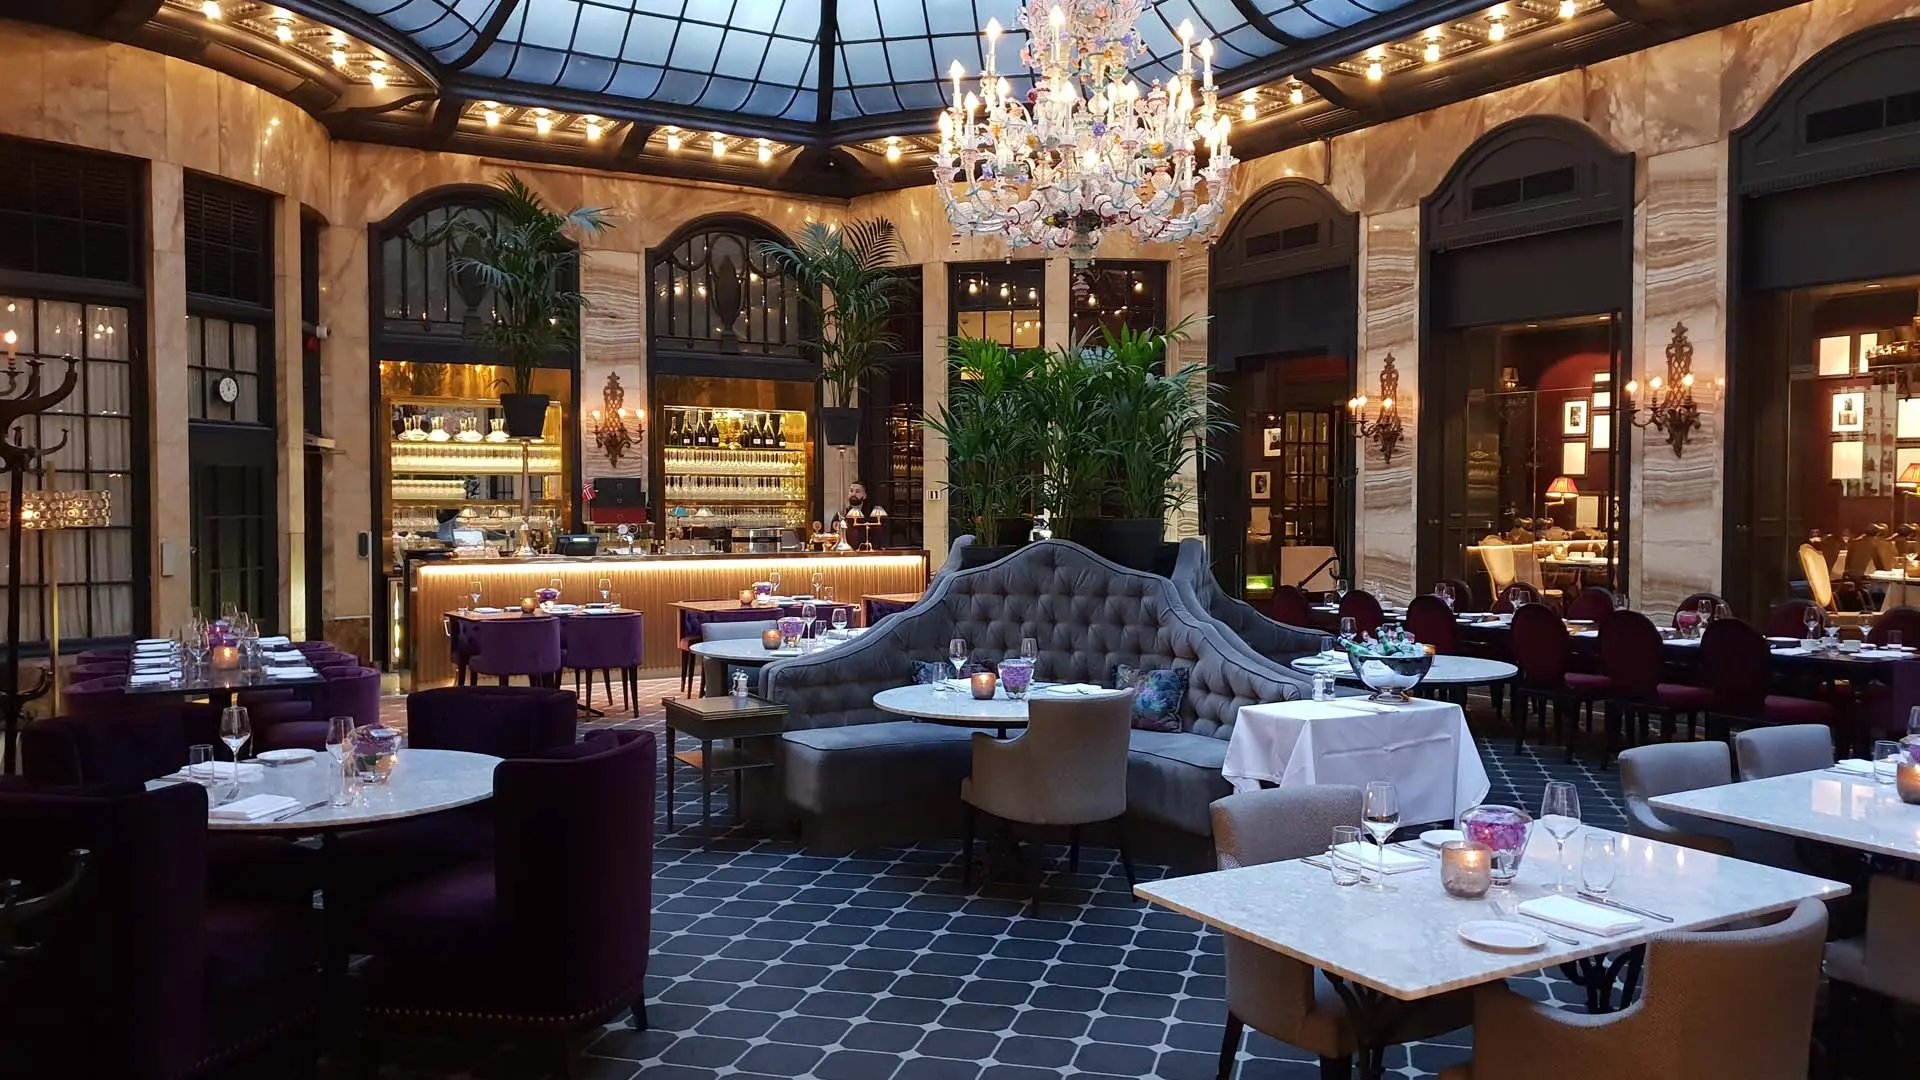 Hotel review Restaurants & Bars' - Grand Hotel - 0